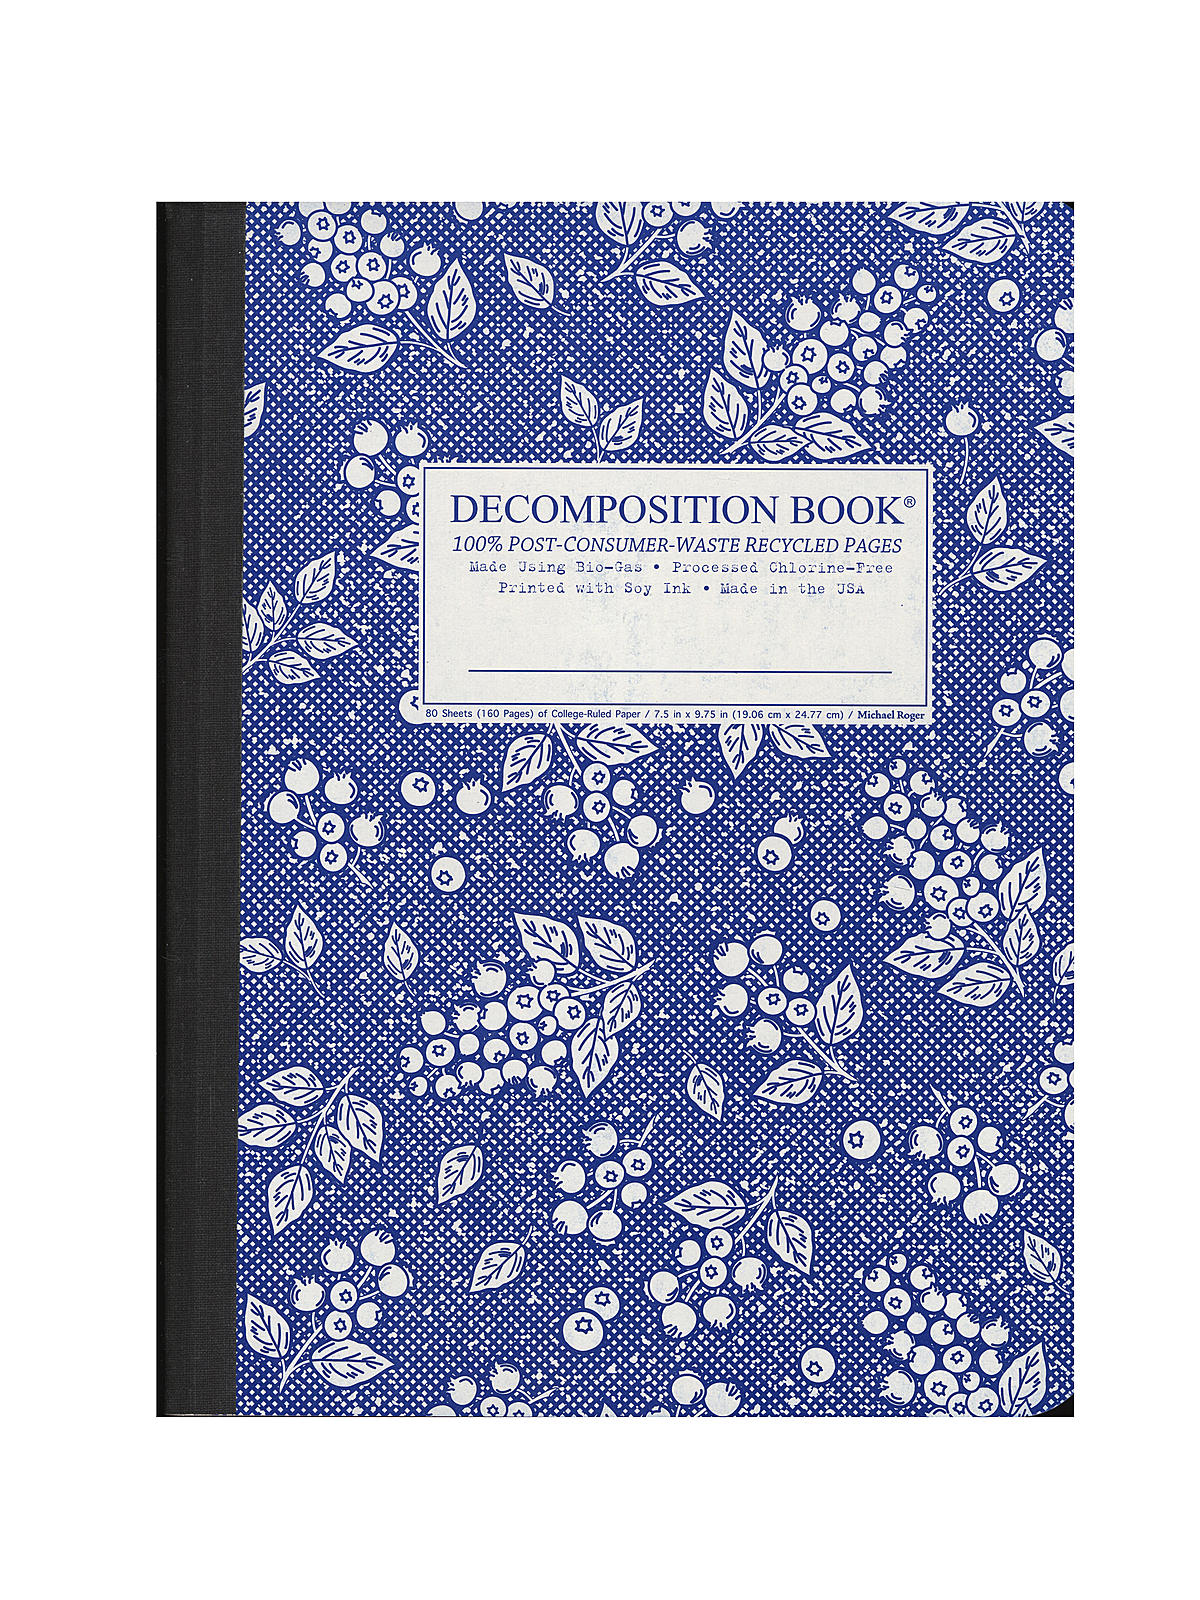 Decomposition Book Blueberry